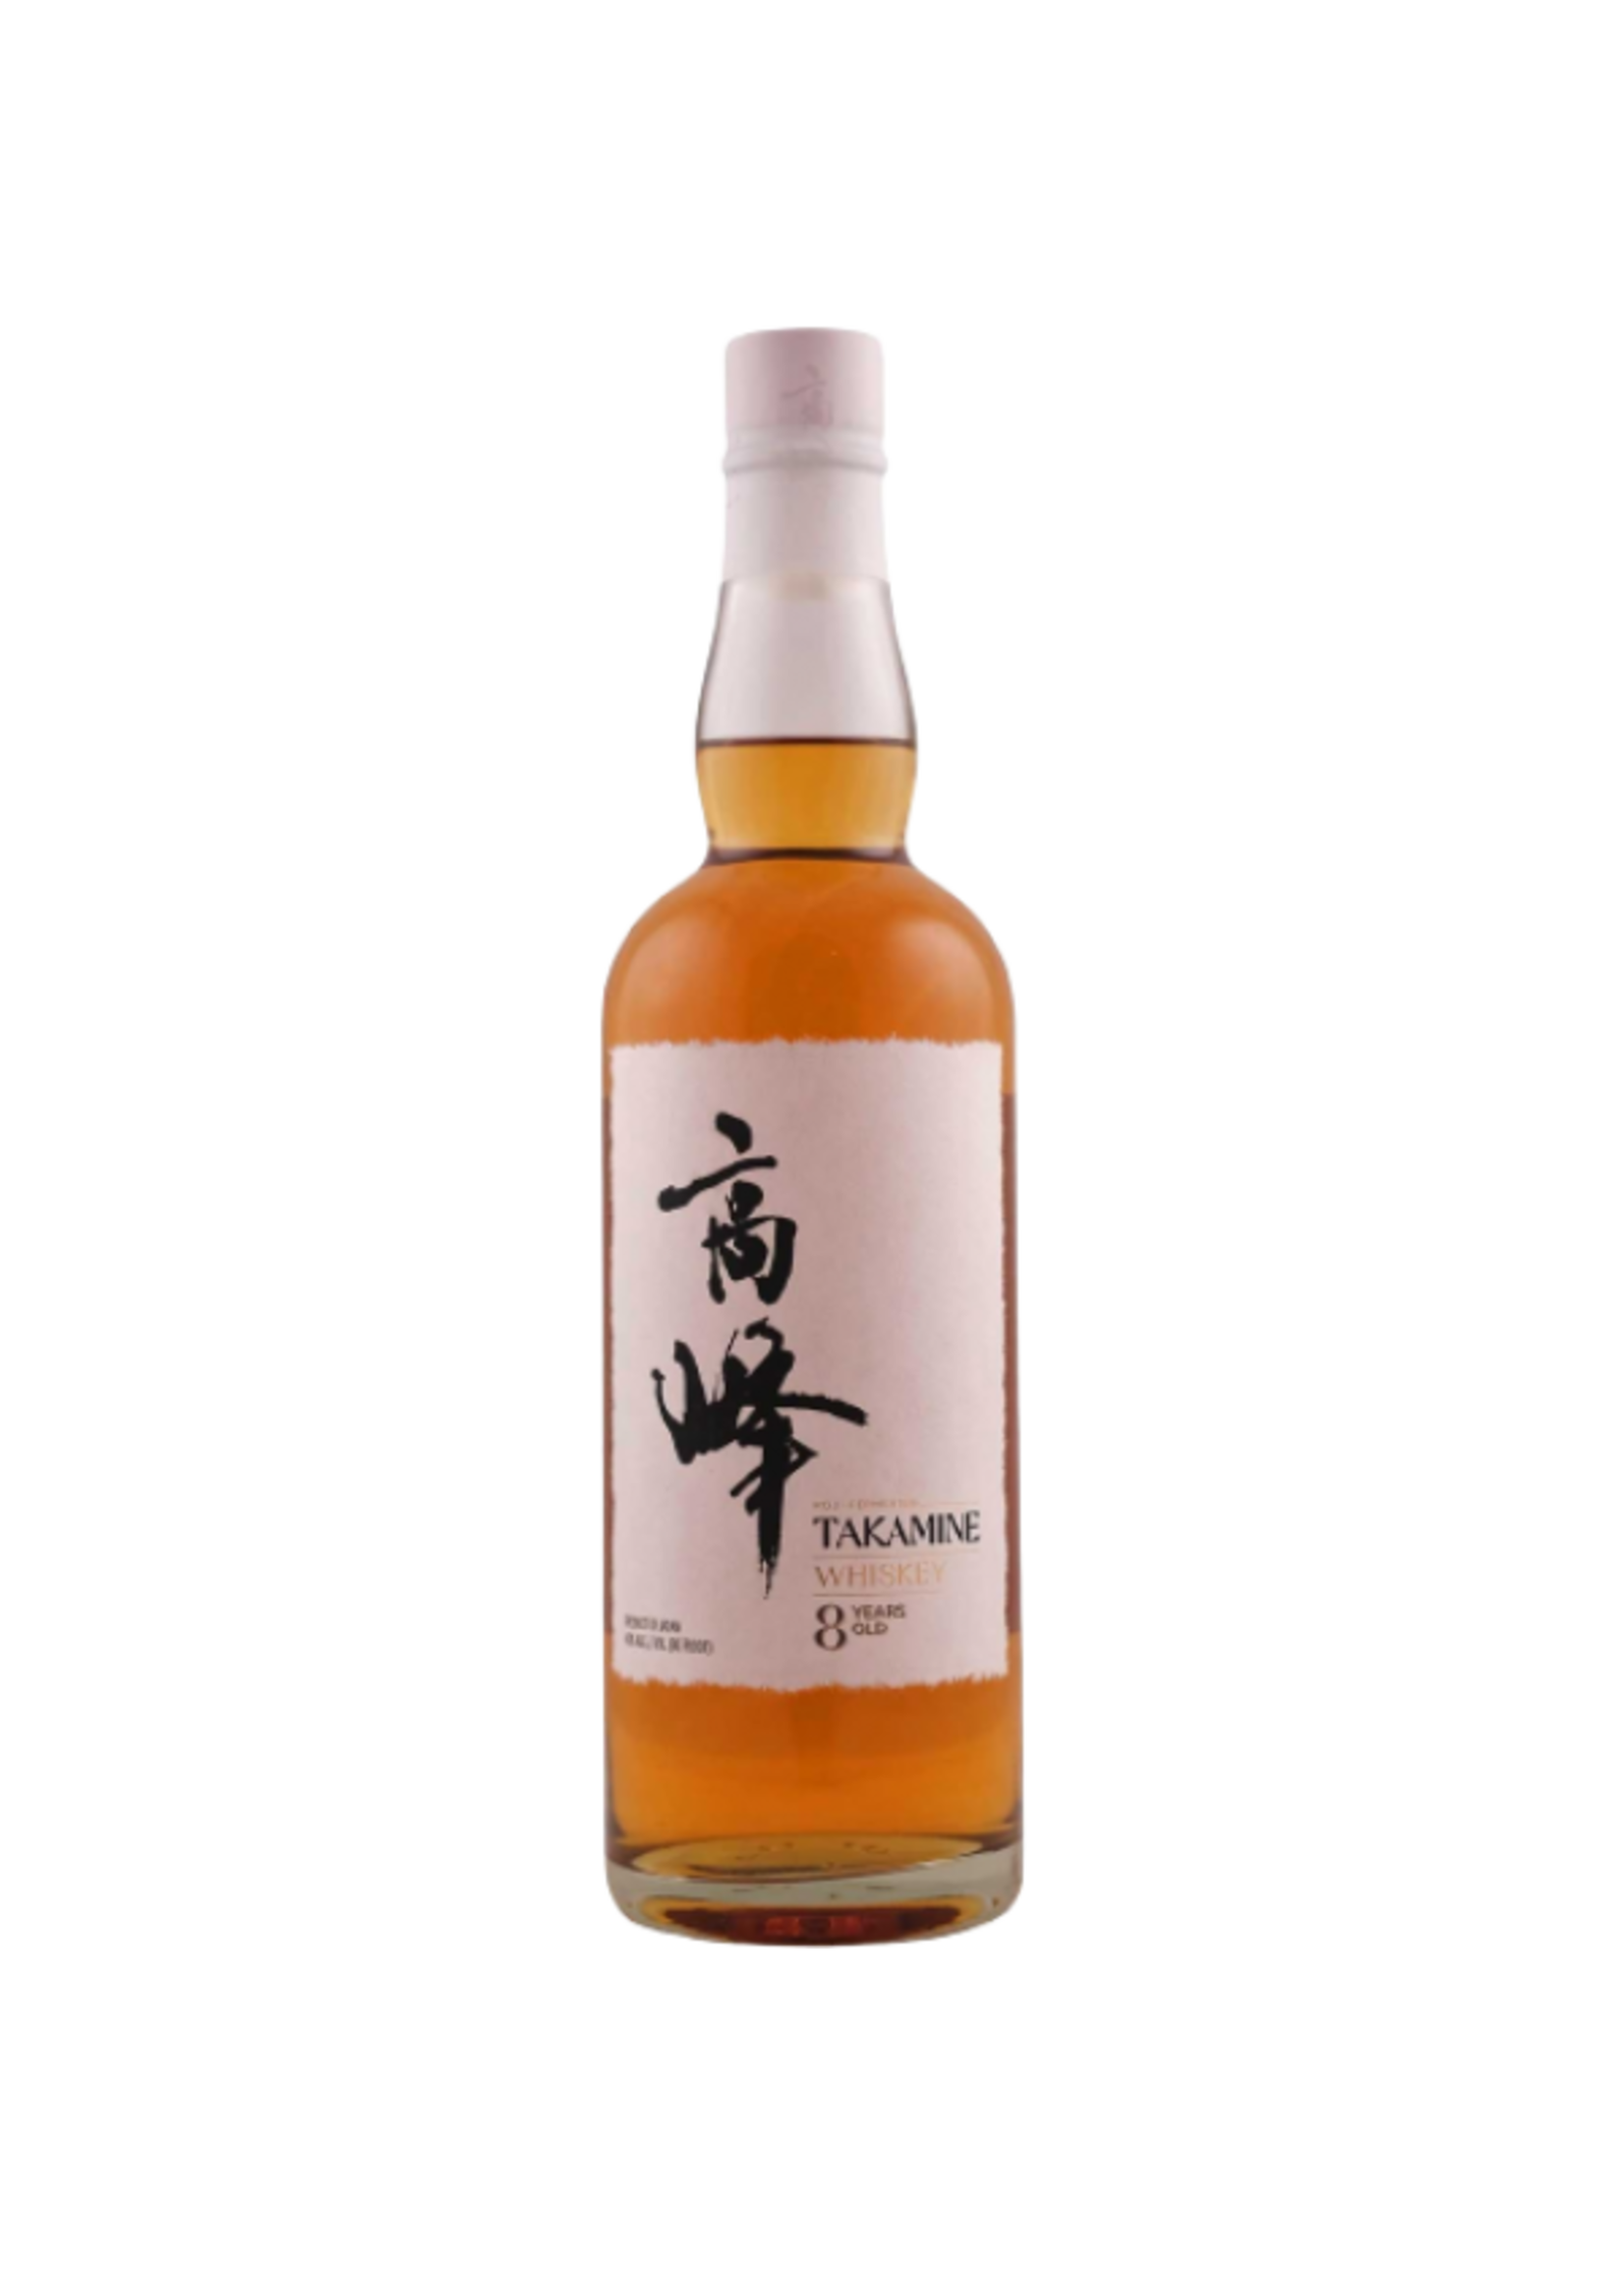 Takamine Takamine / 8 Year Old Koji Japanese Whiskey 40% abv / 750mL